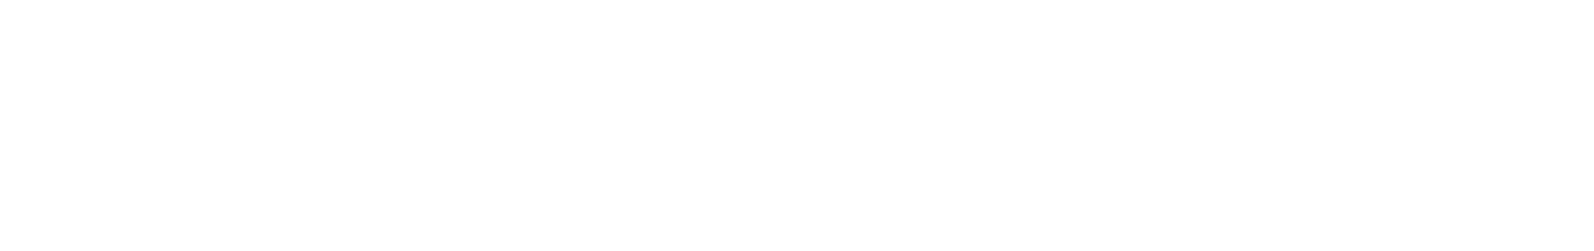 Allied Group Limited Logo groß für dunkle Hintergründe (transparentes PNG)